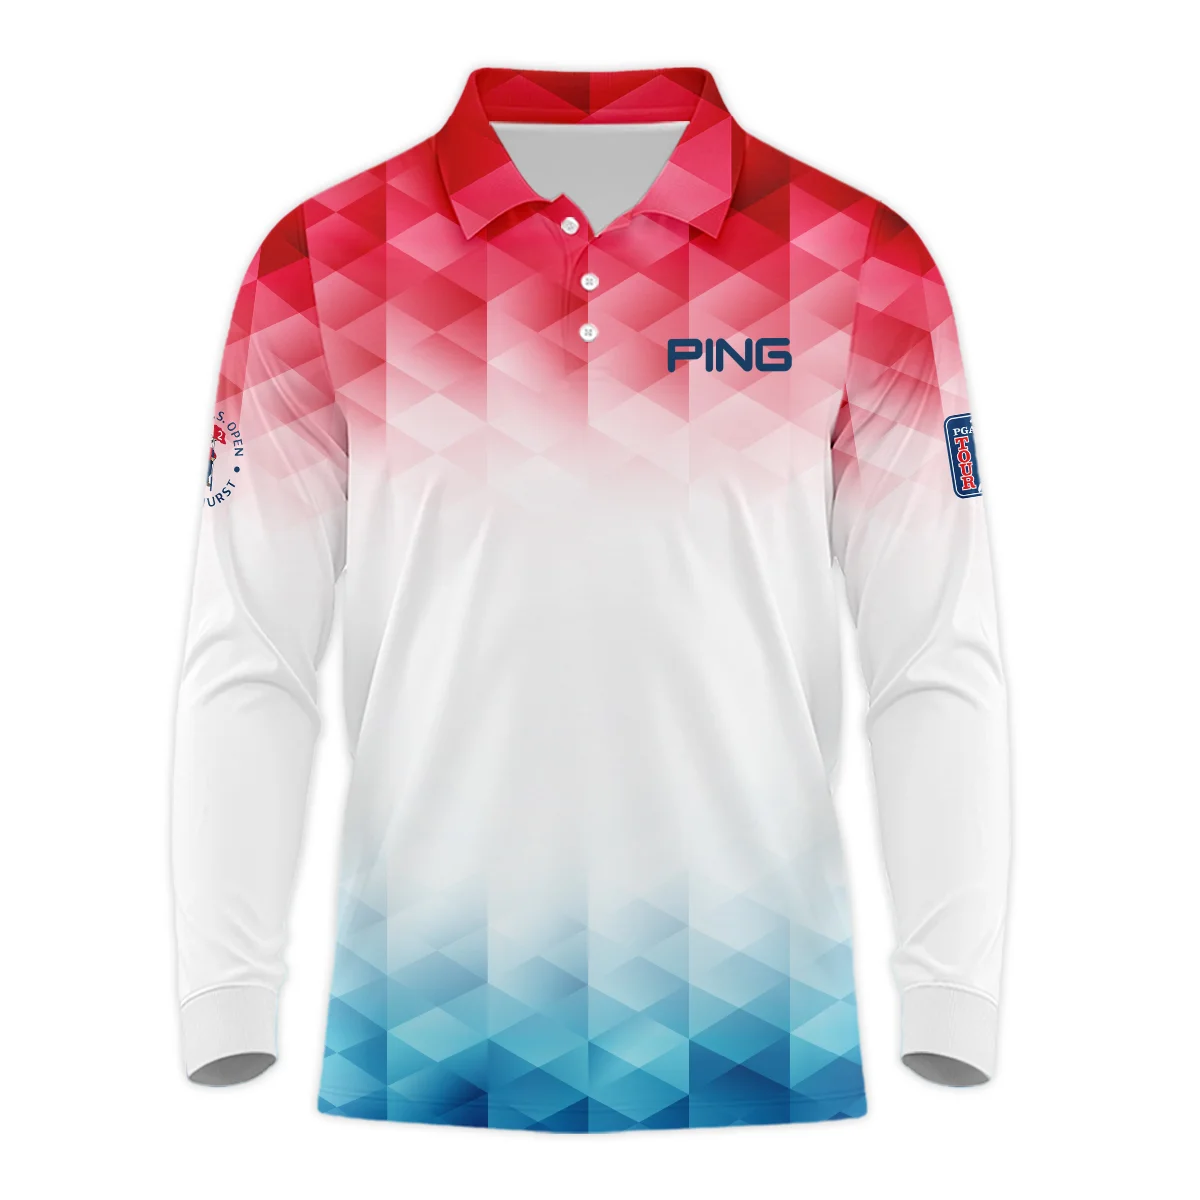 124th U.S. Open Pinehurst Ping Golf Sport Hoodie Shirt Blue Red Abstract Geometric Triangles All Over Print Hoodie Shirt